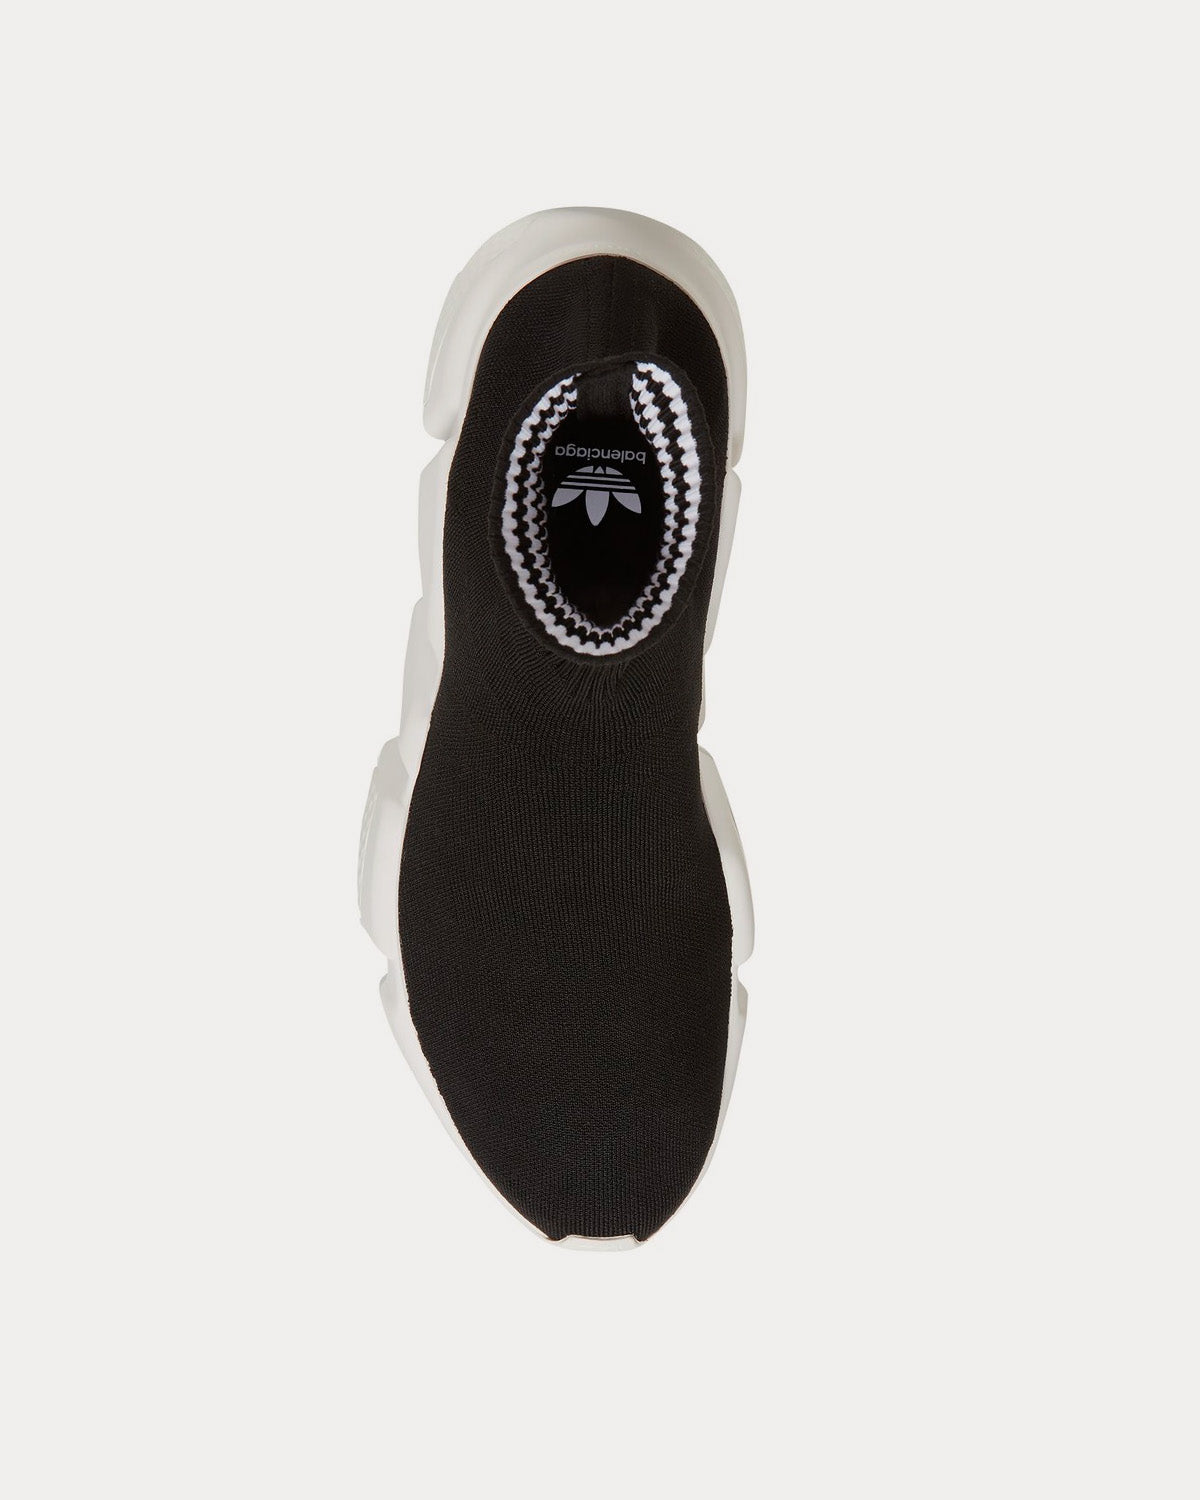 Balenciaga x Adidas - Speed Knit Black High Top Sneakers